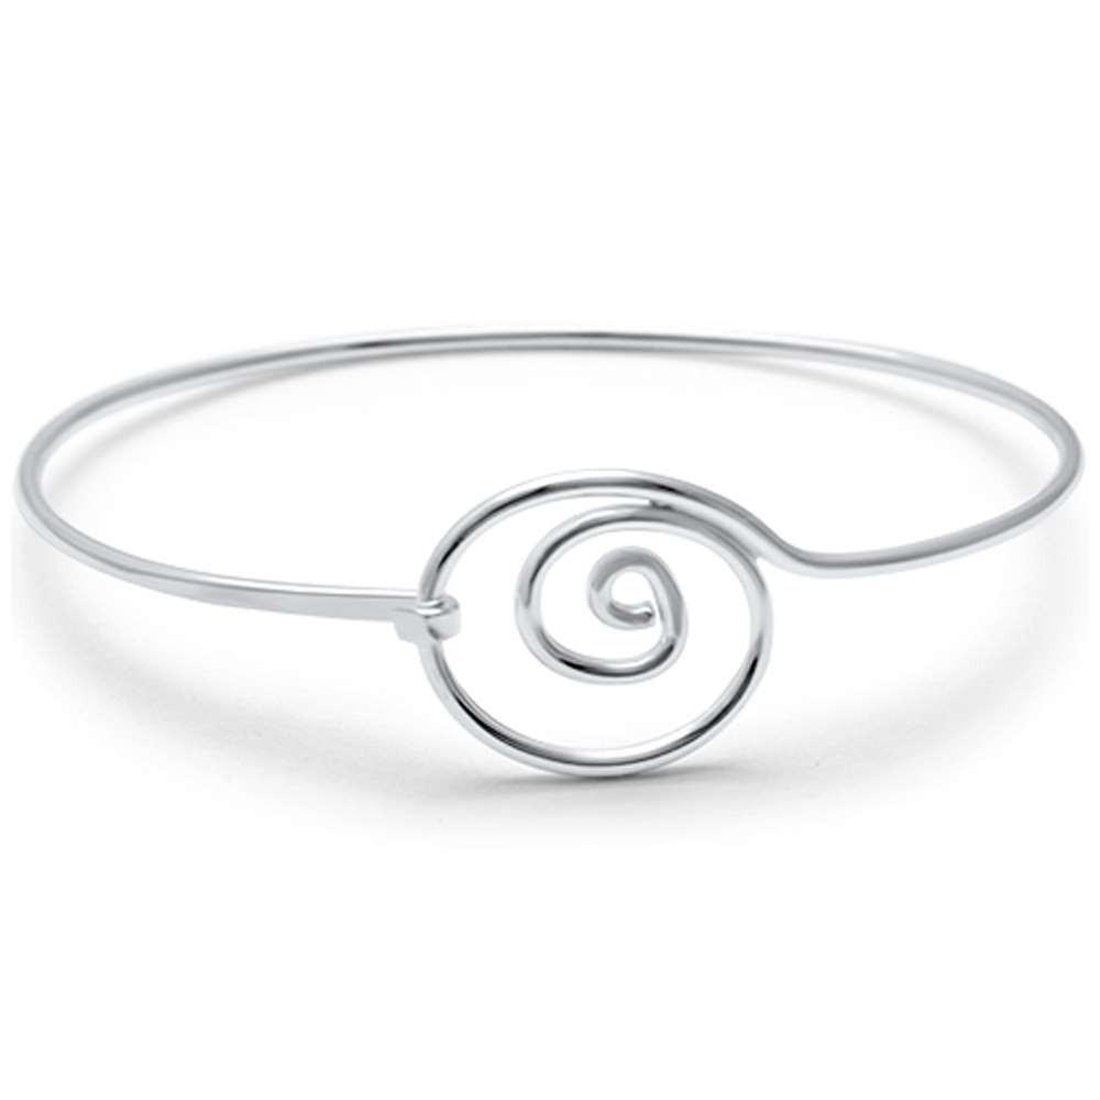 Plain Swirl Spiral Bangle Bracelet 925 Sterling Silver